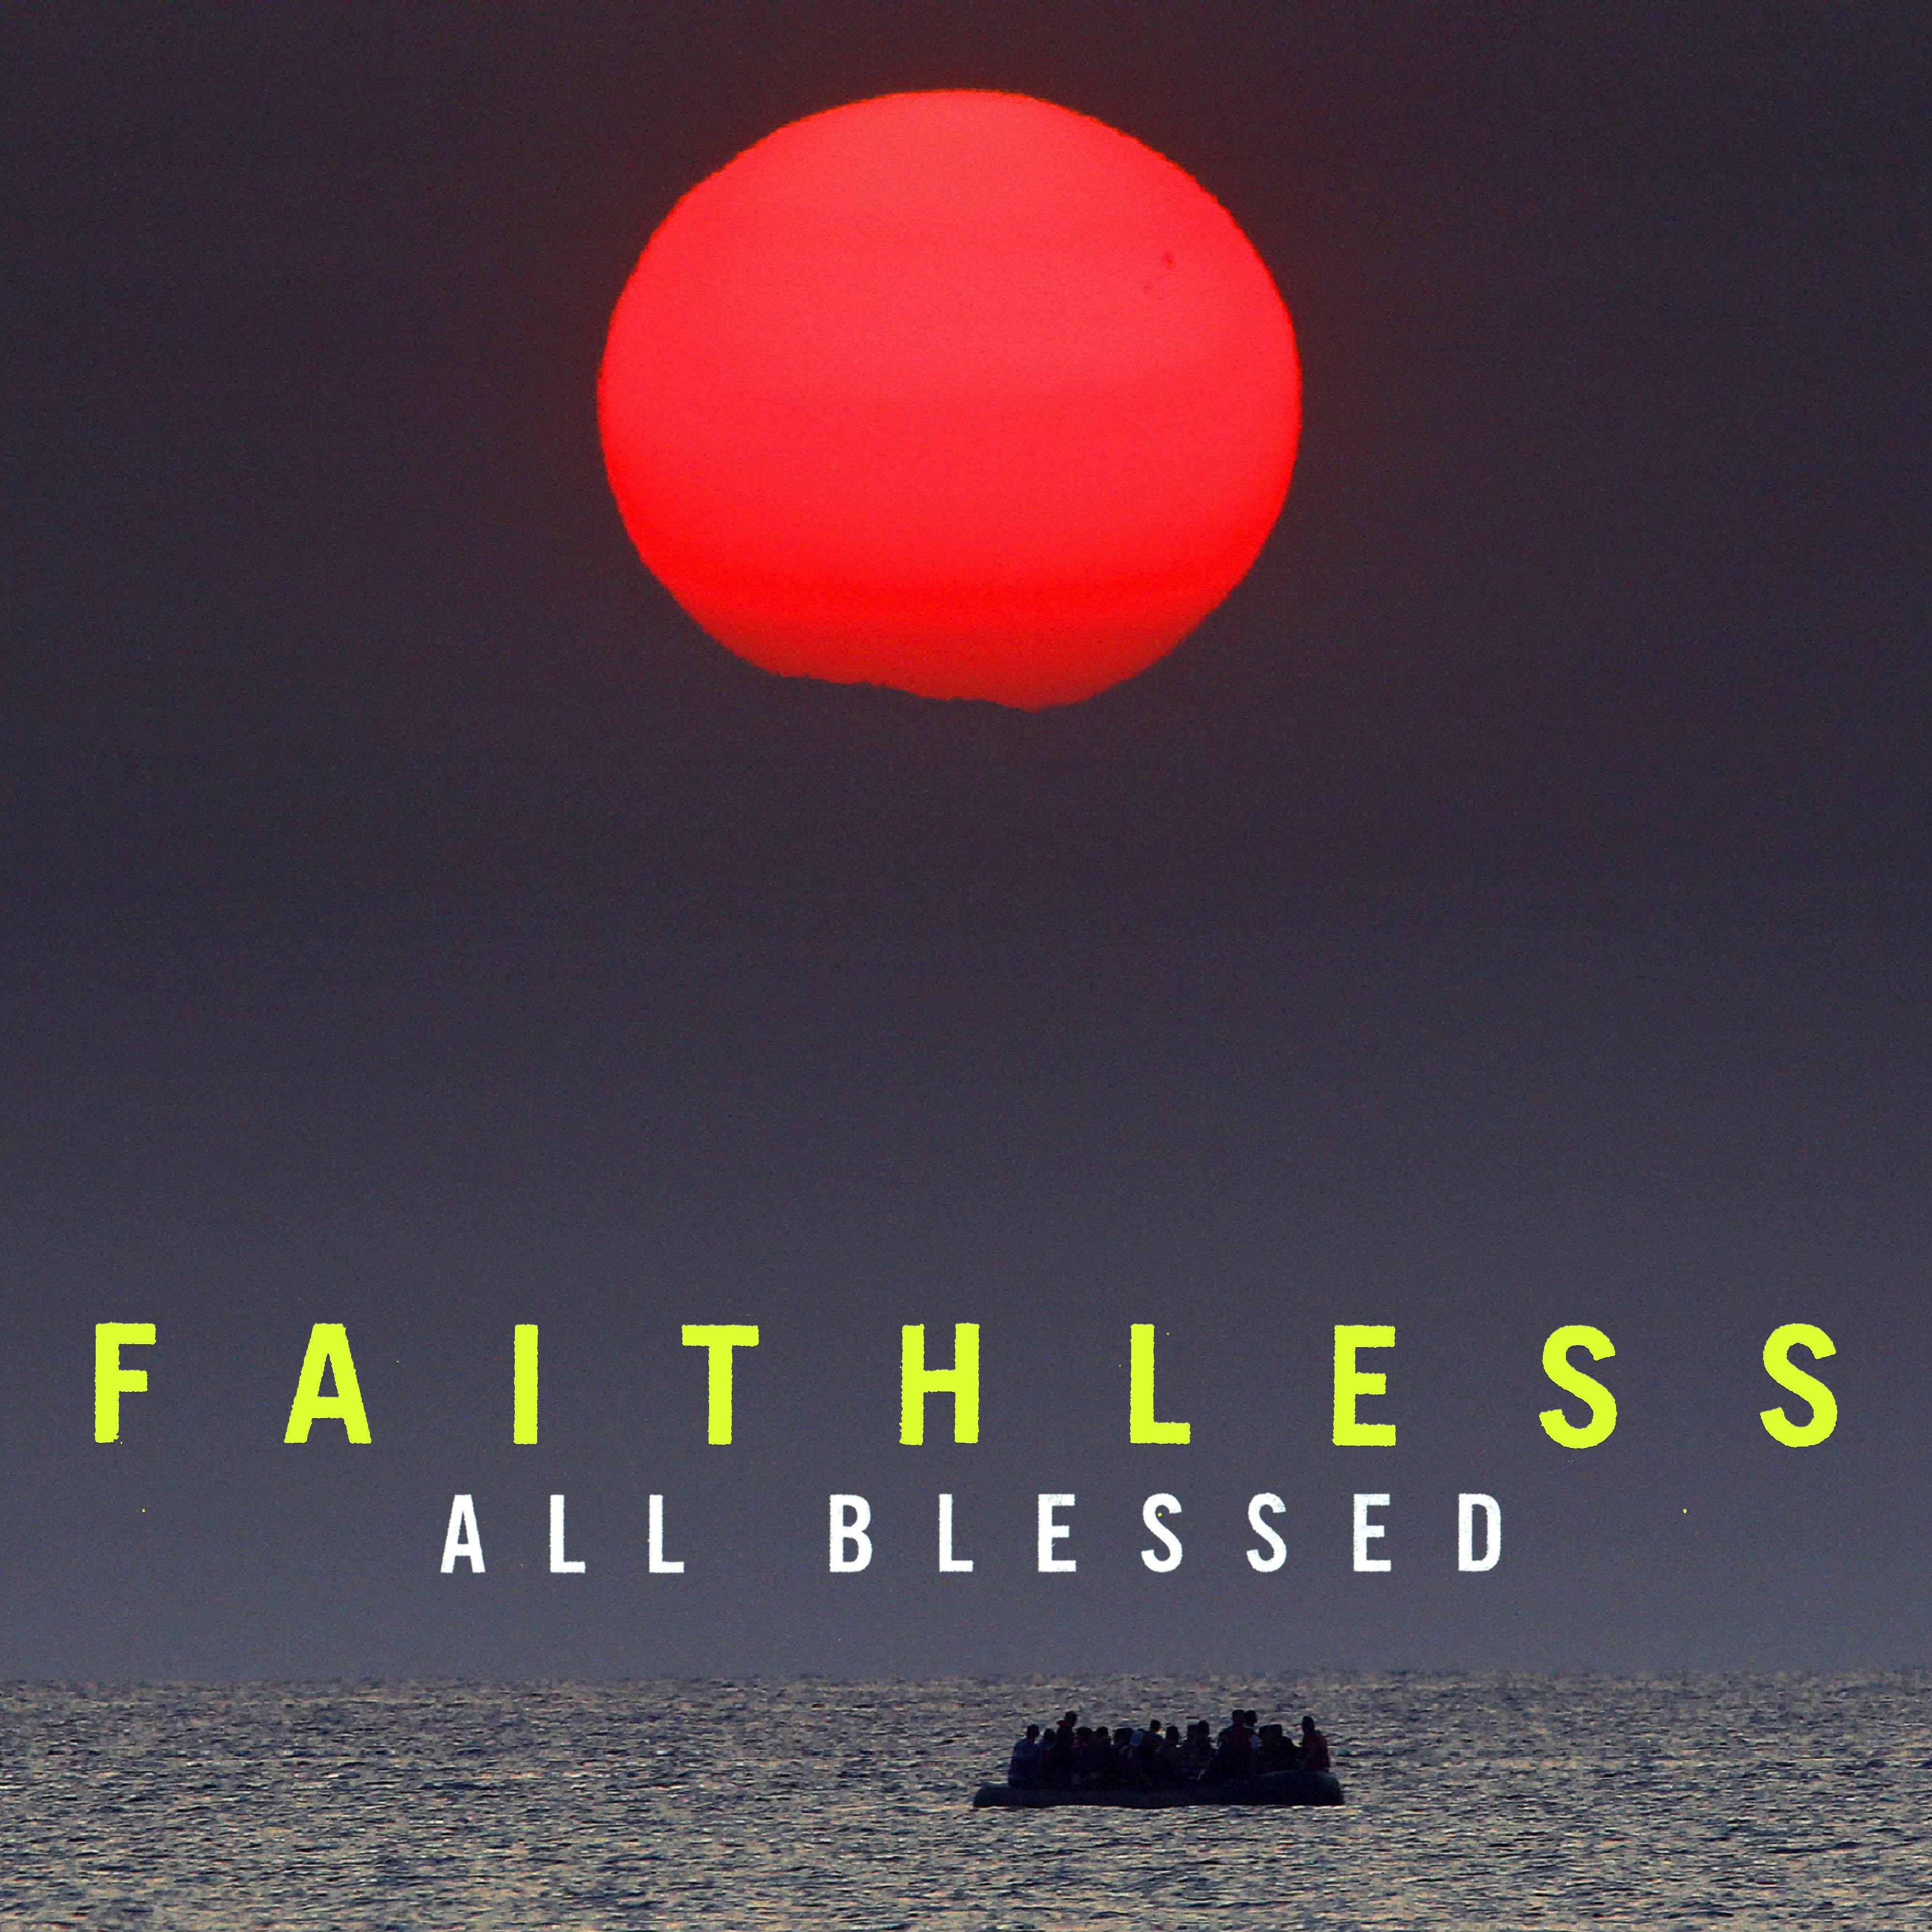 Faithless - Poetry (feat. Suli Breaks)